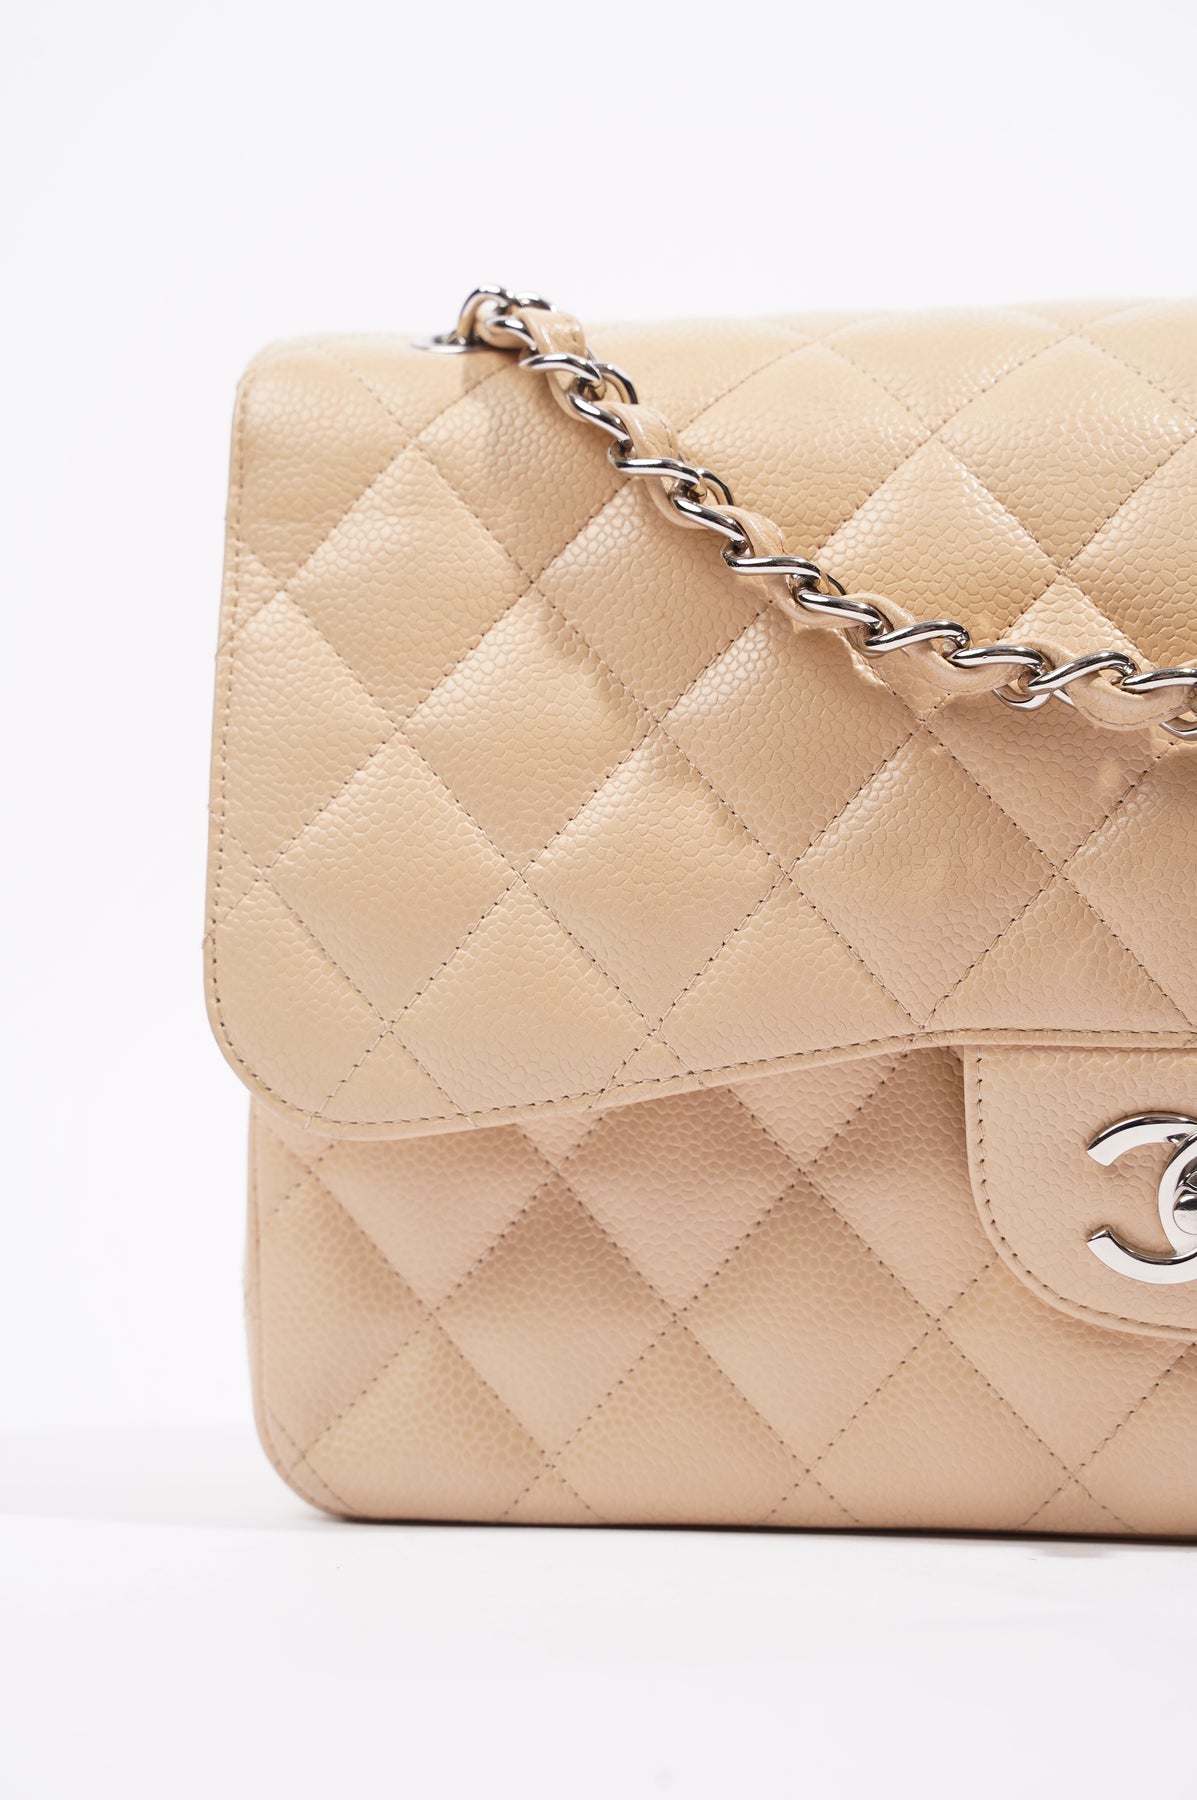 Chanel 3.55 purses handbags must have